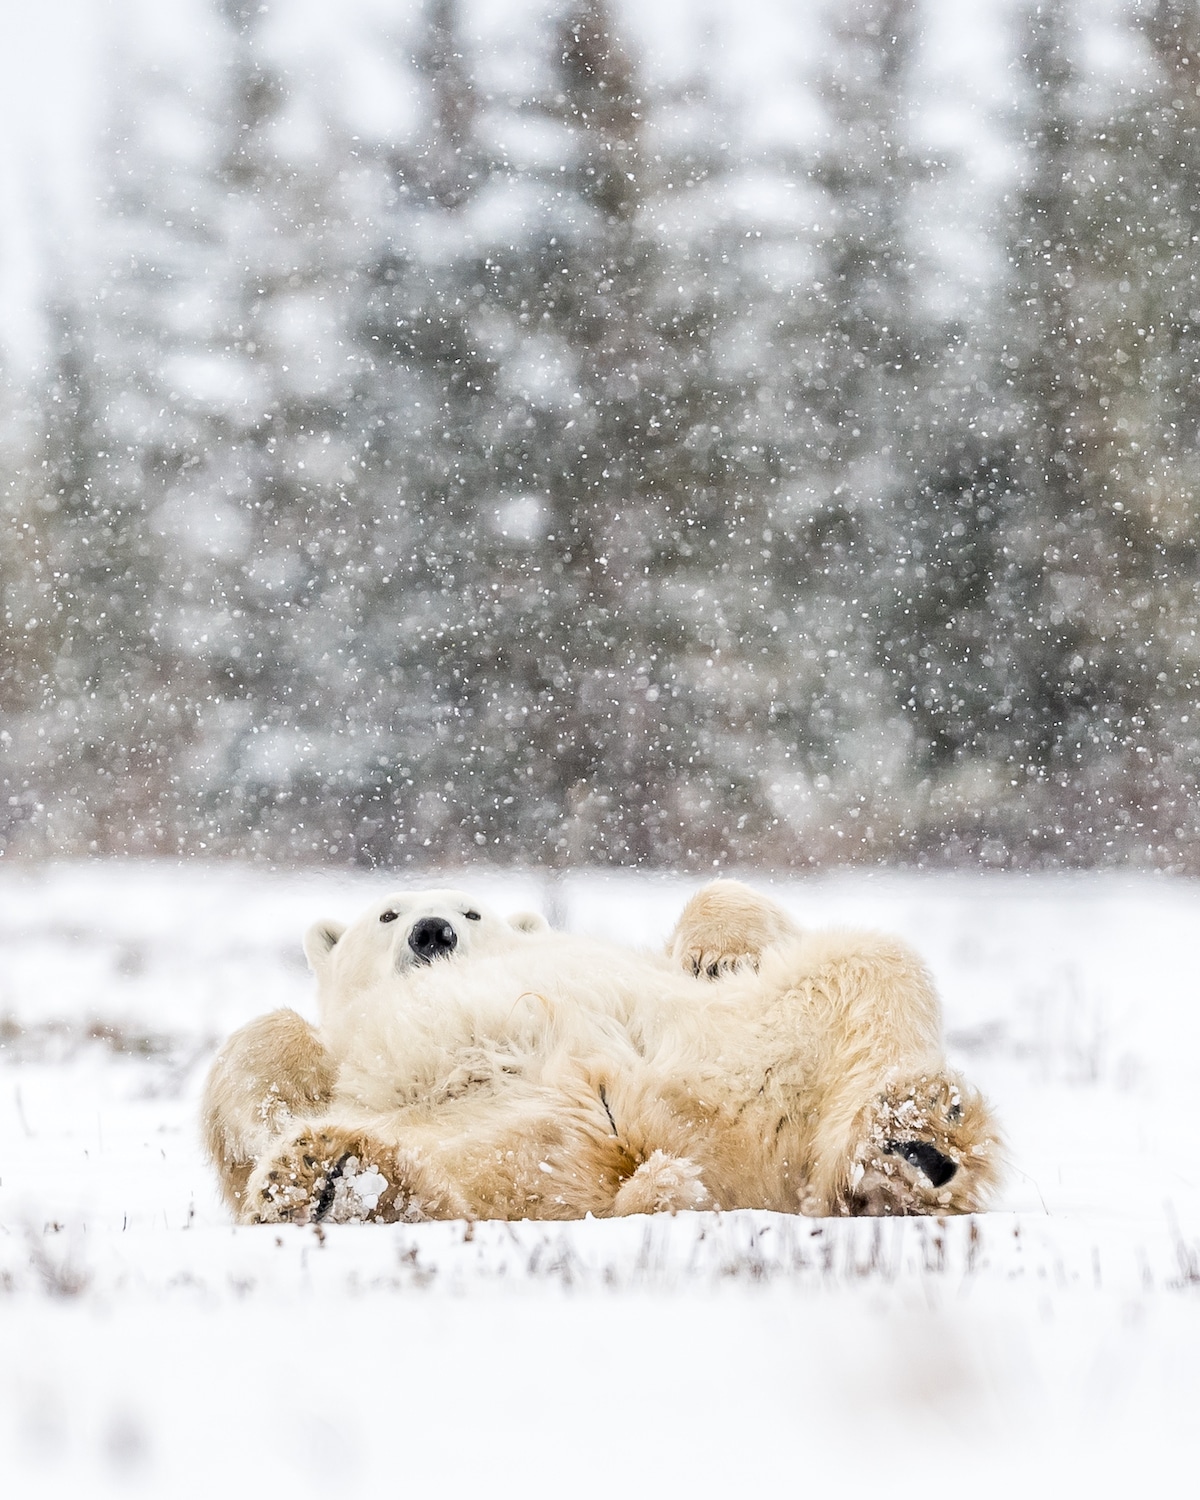 Canadian Polar Bears by George Turner